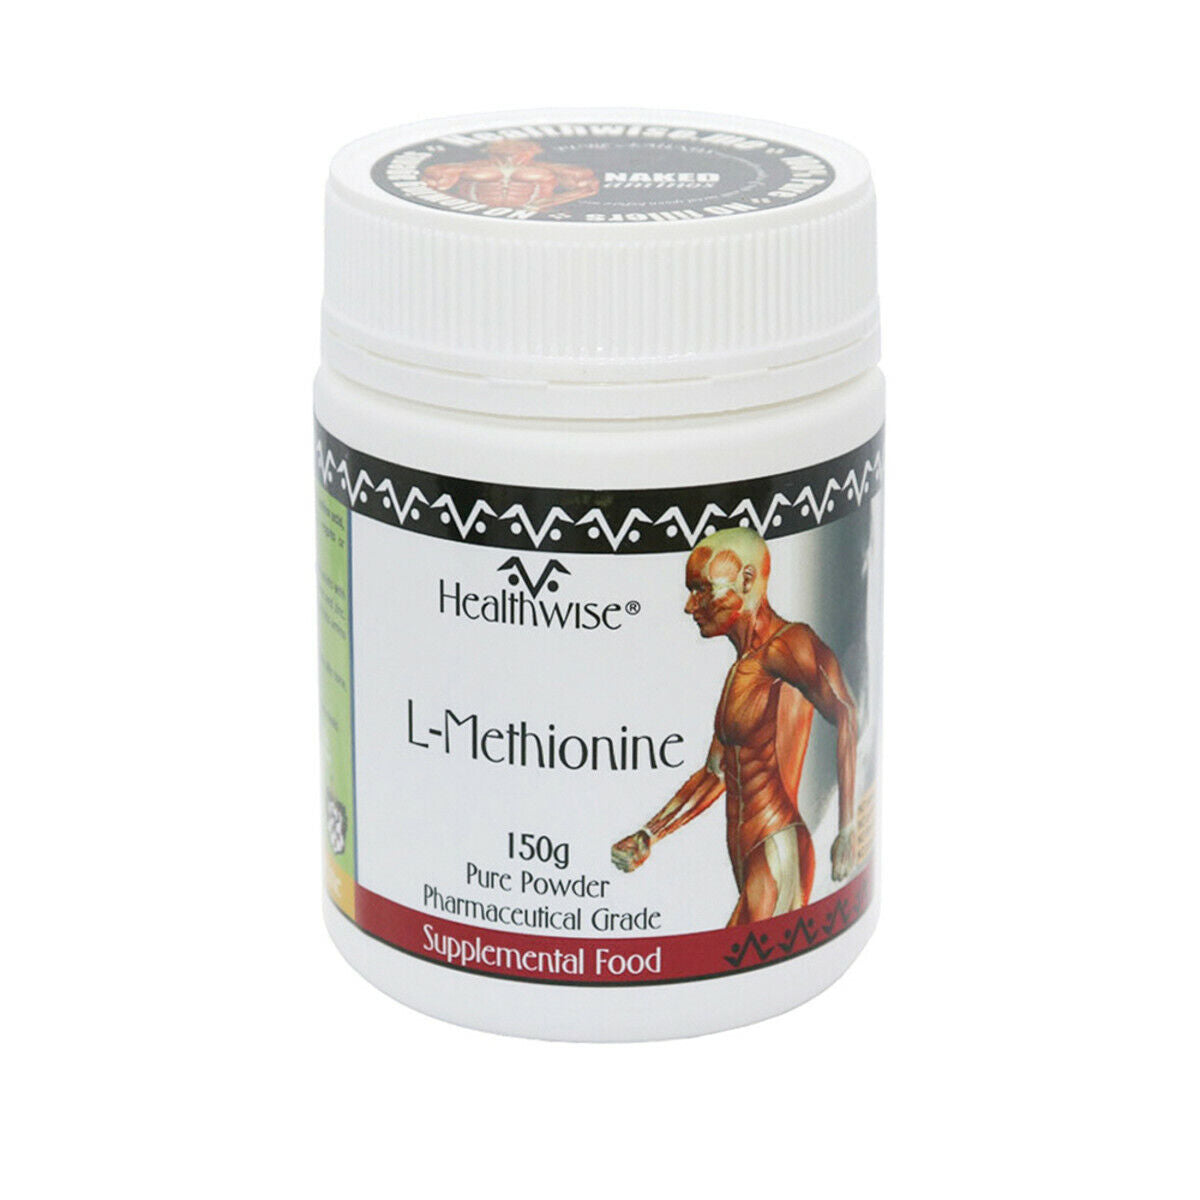 Healthwise L-Methionine 150g Powder